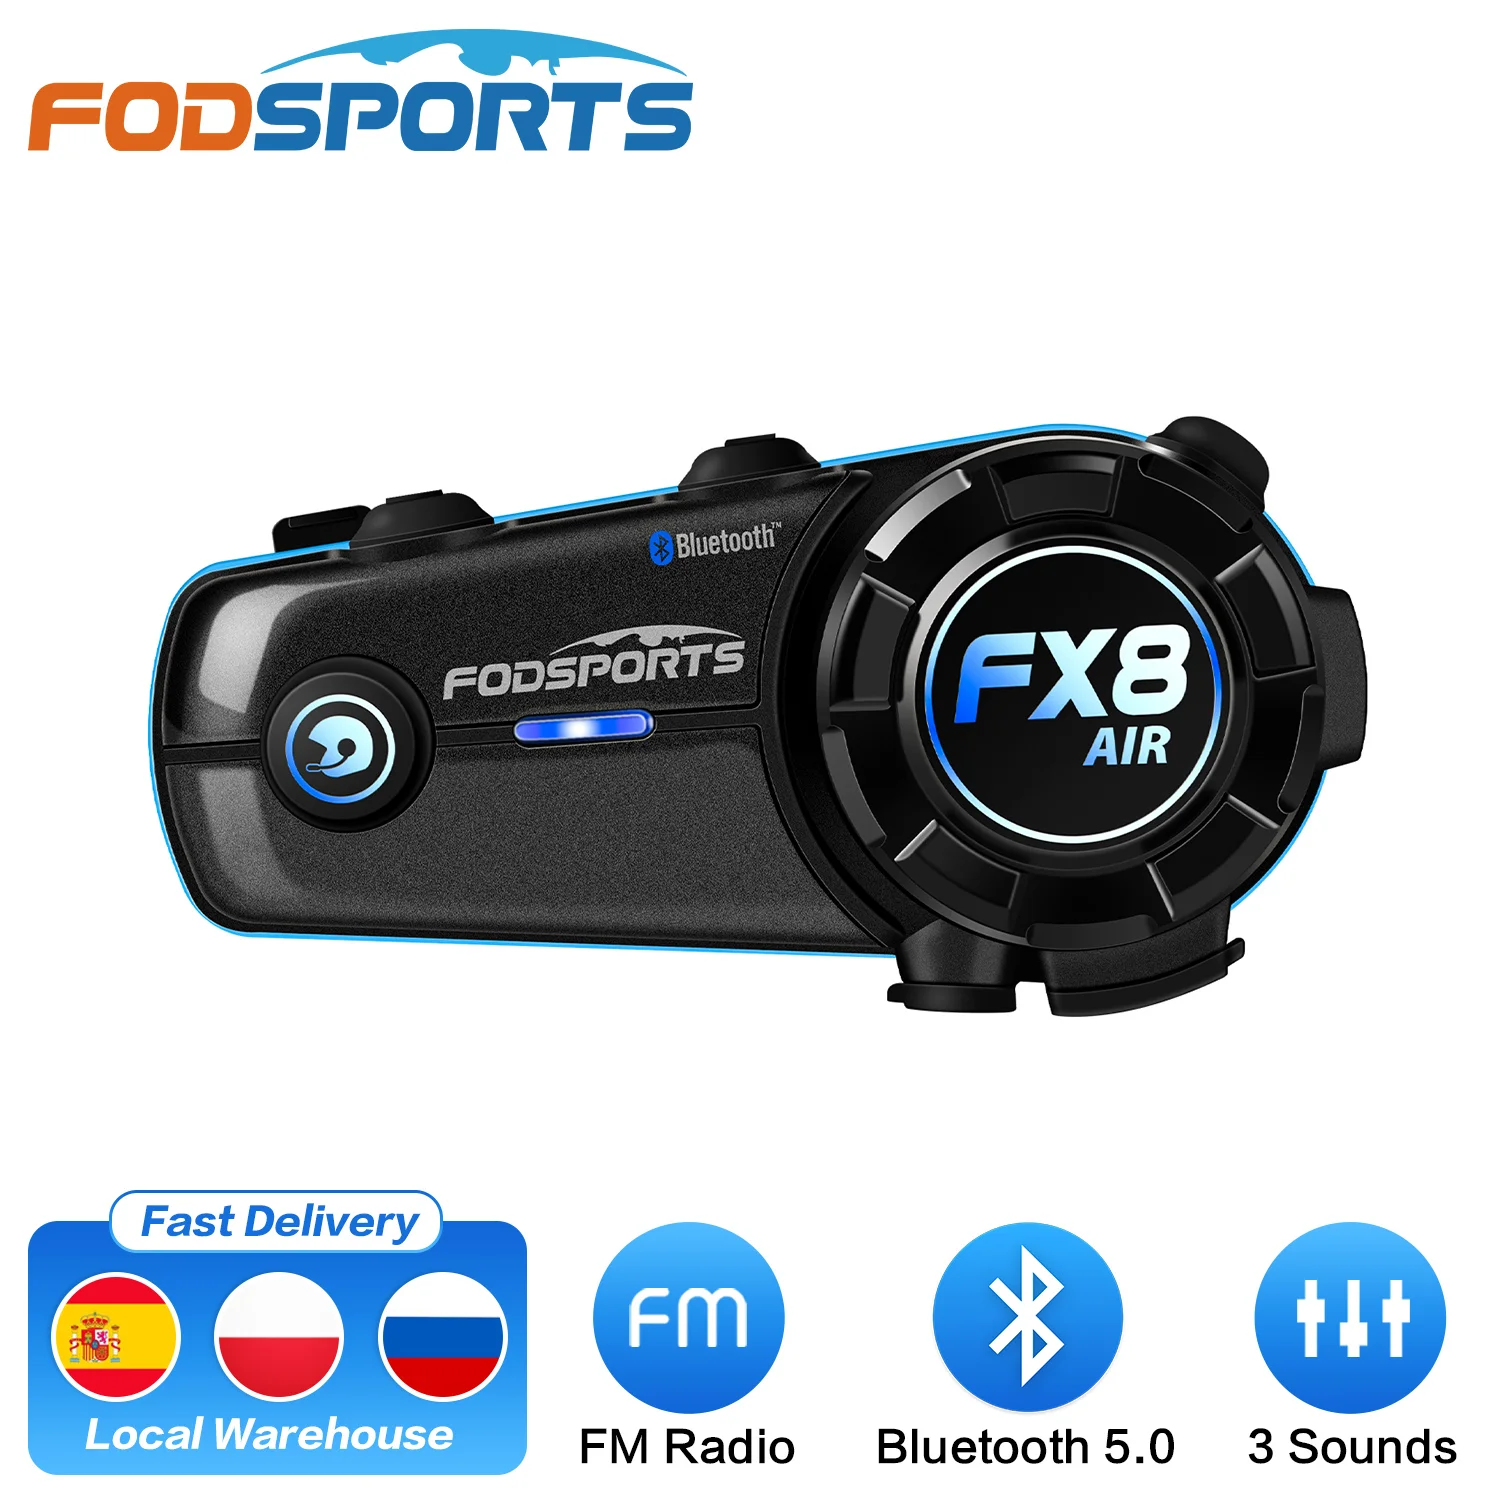 Fodsports FX8 AIR   ..